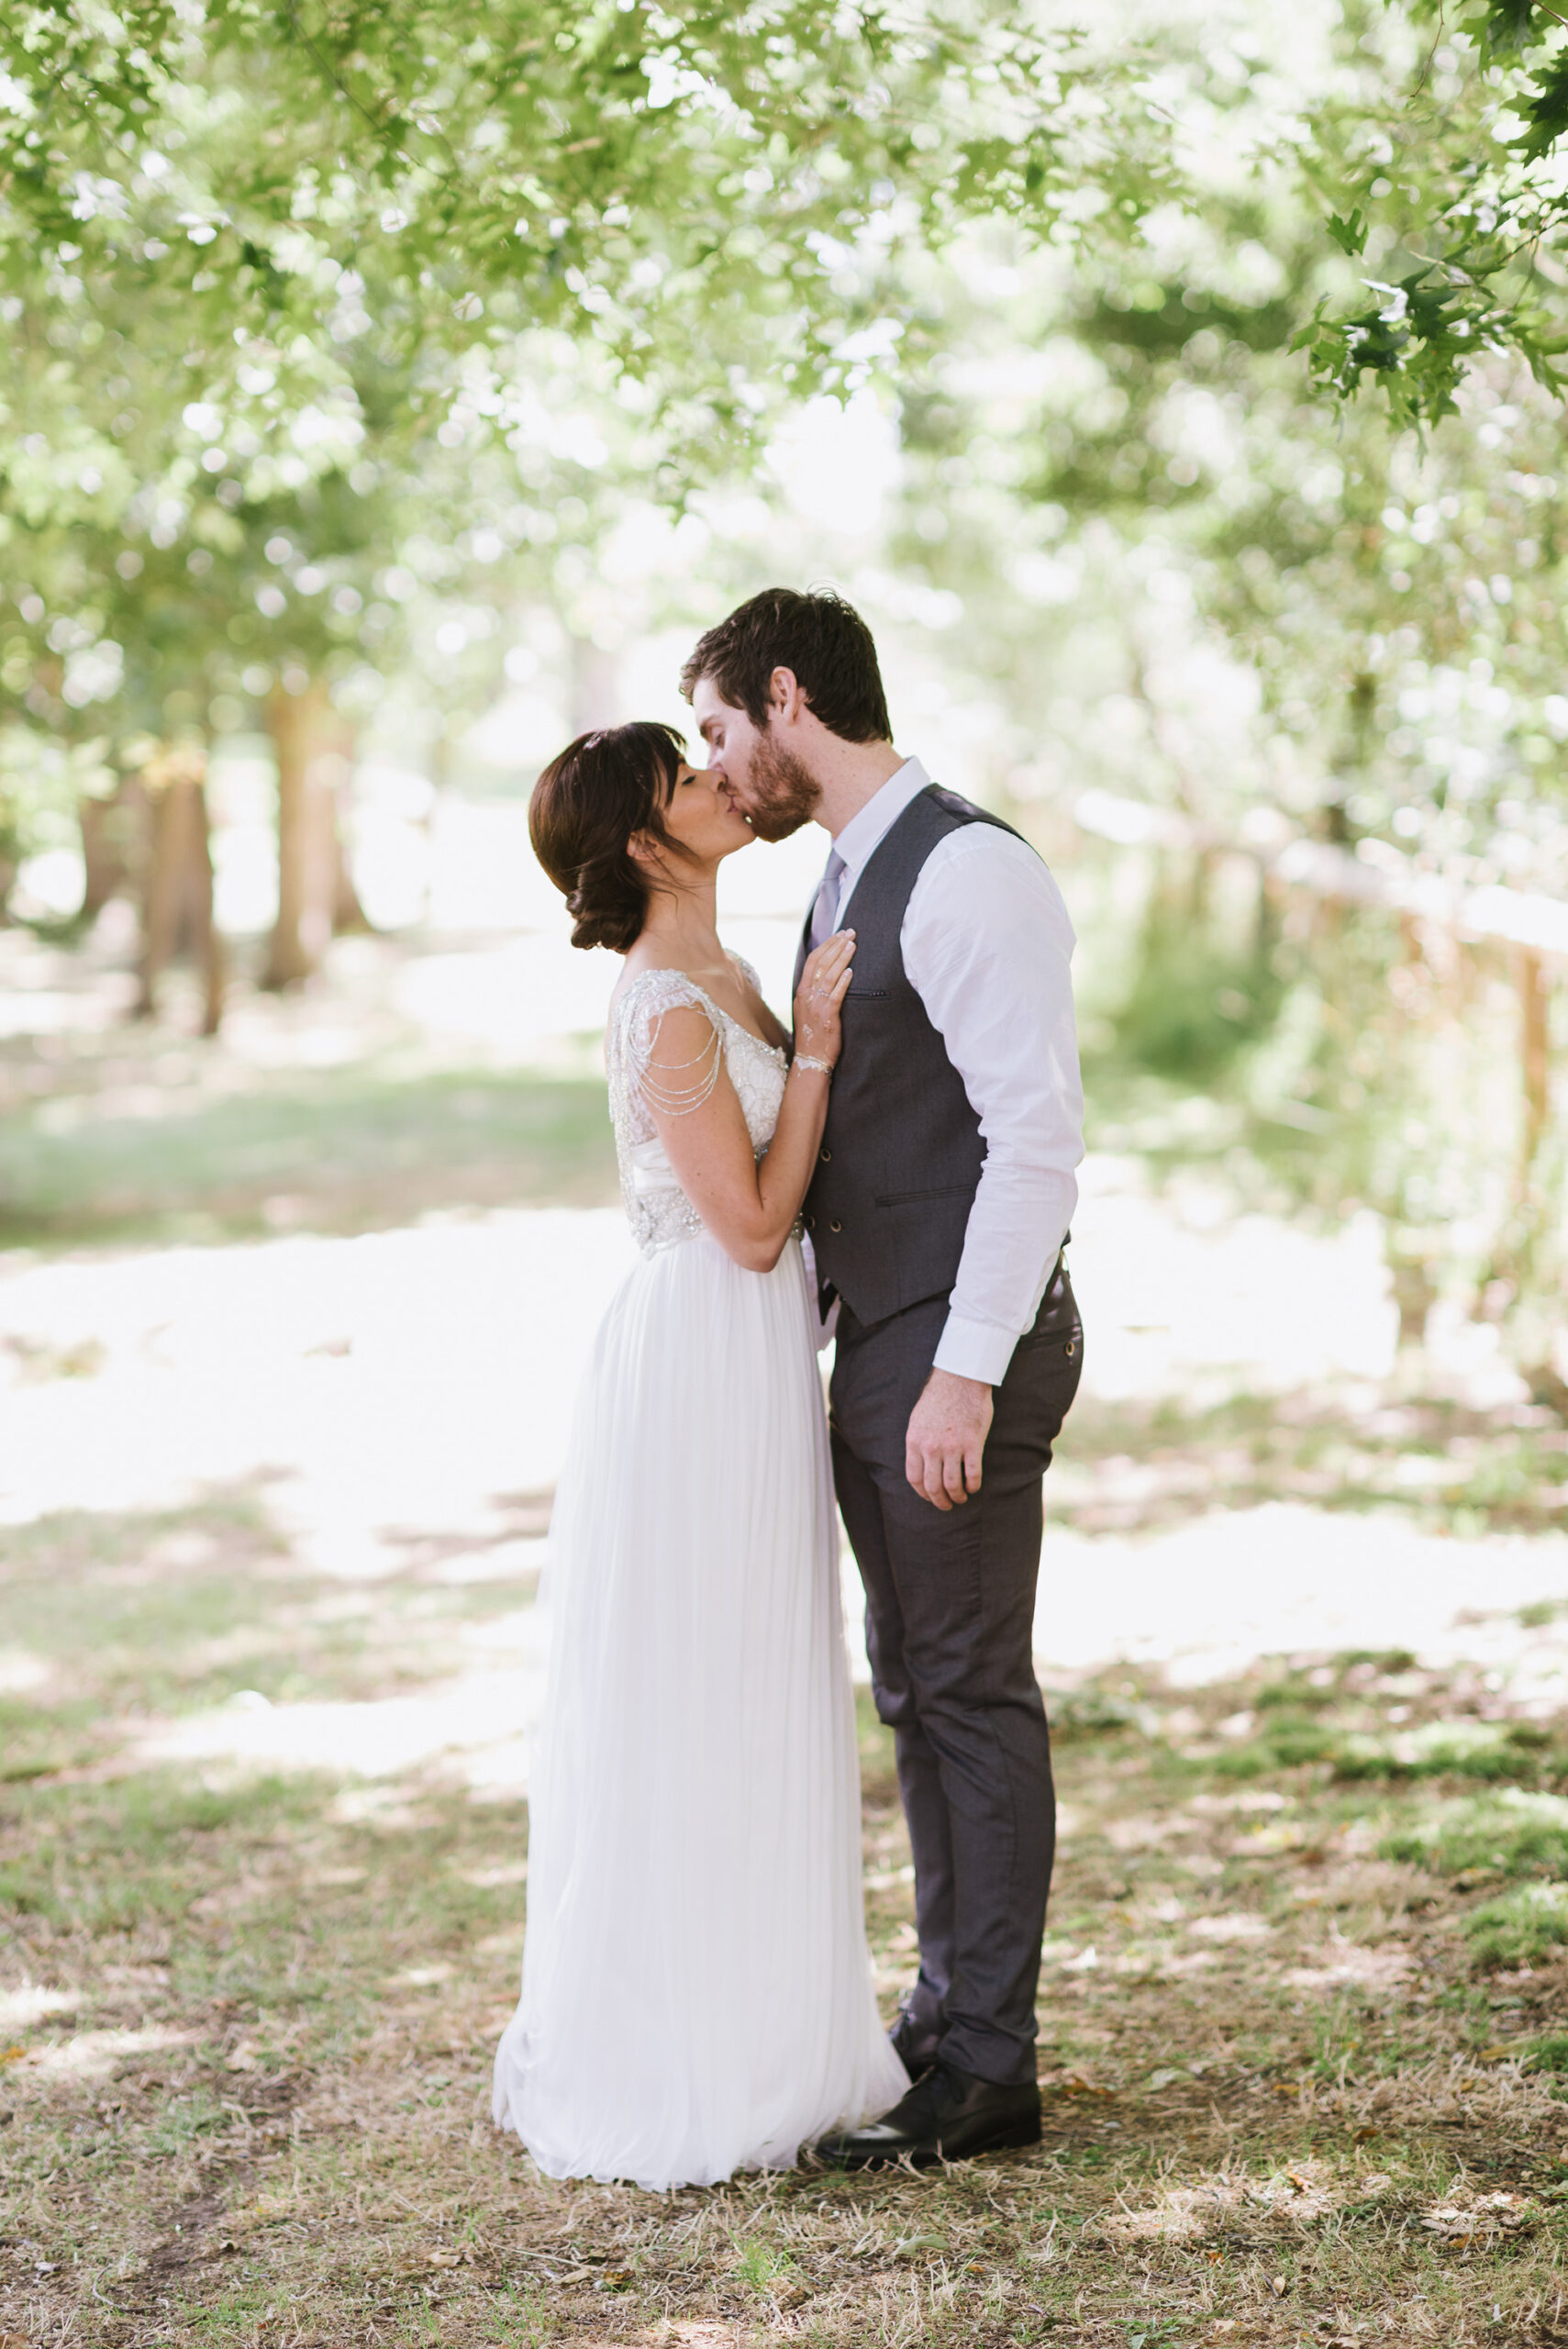 Laura_Daniel_Country-Rustic-Wedding_Nicholas-Joel-Photography_020